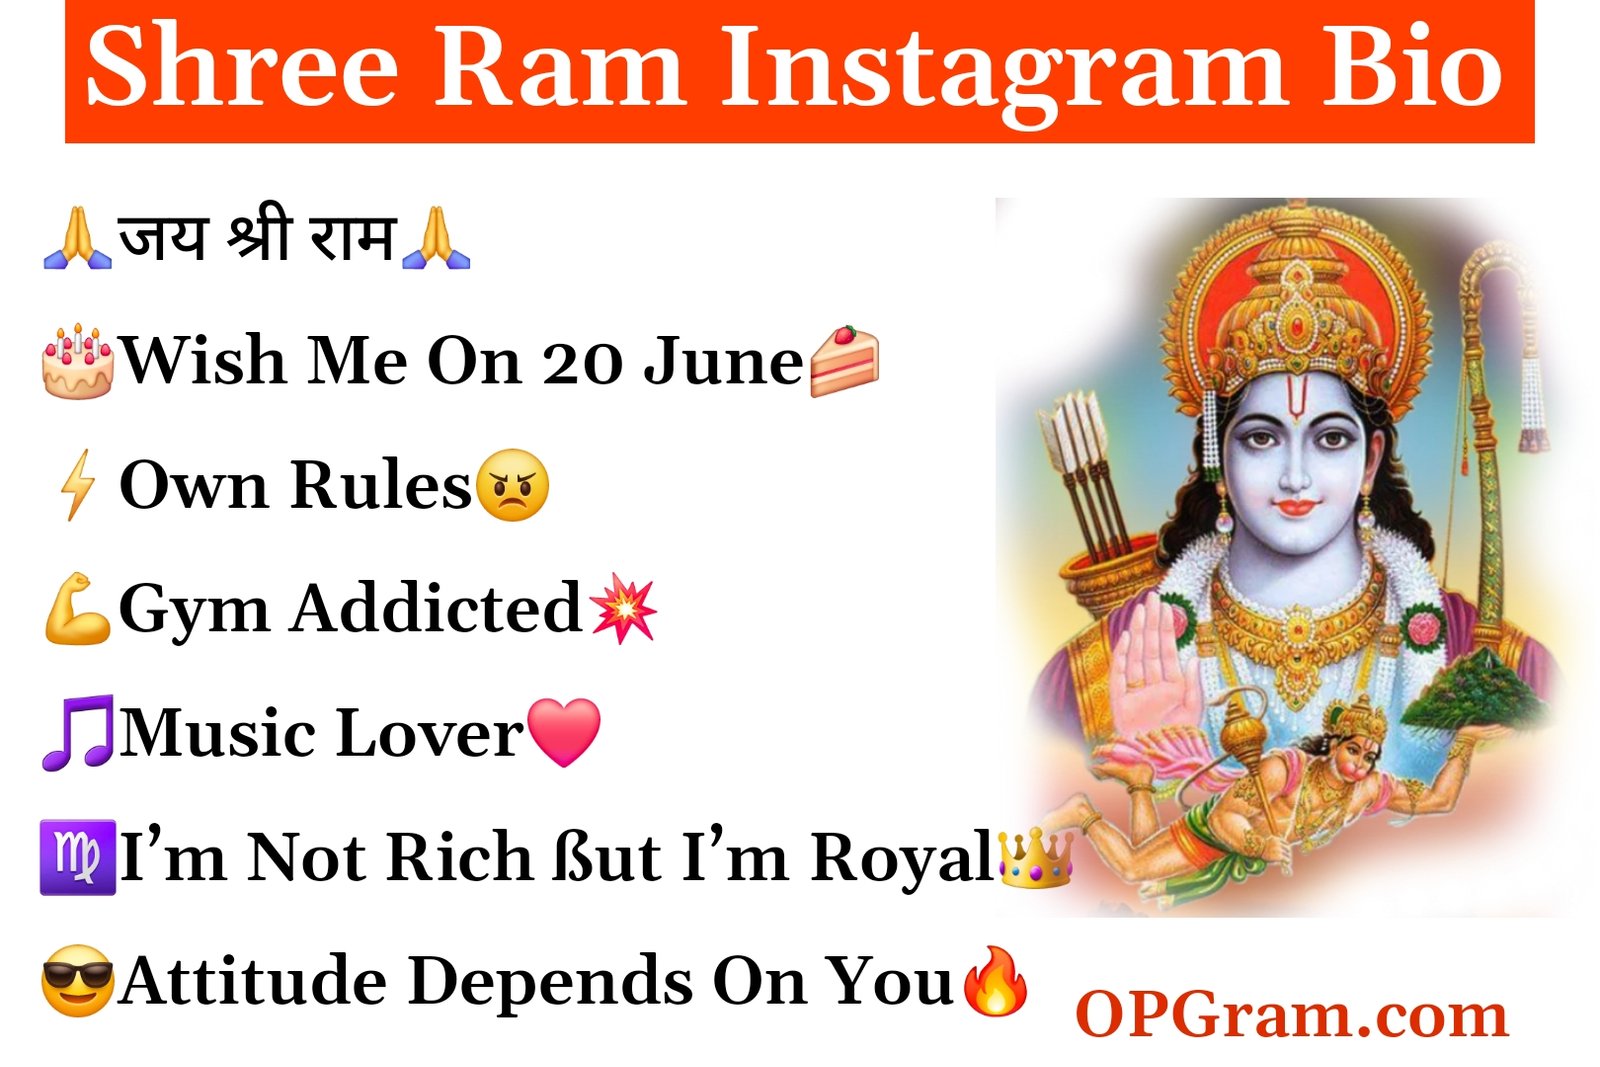 Jai shree ram bio for Instagram